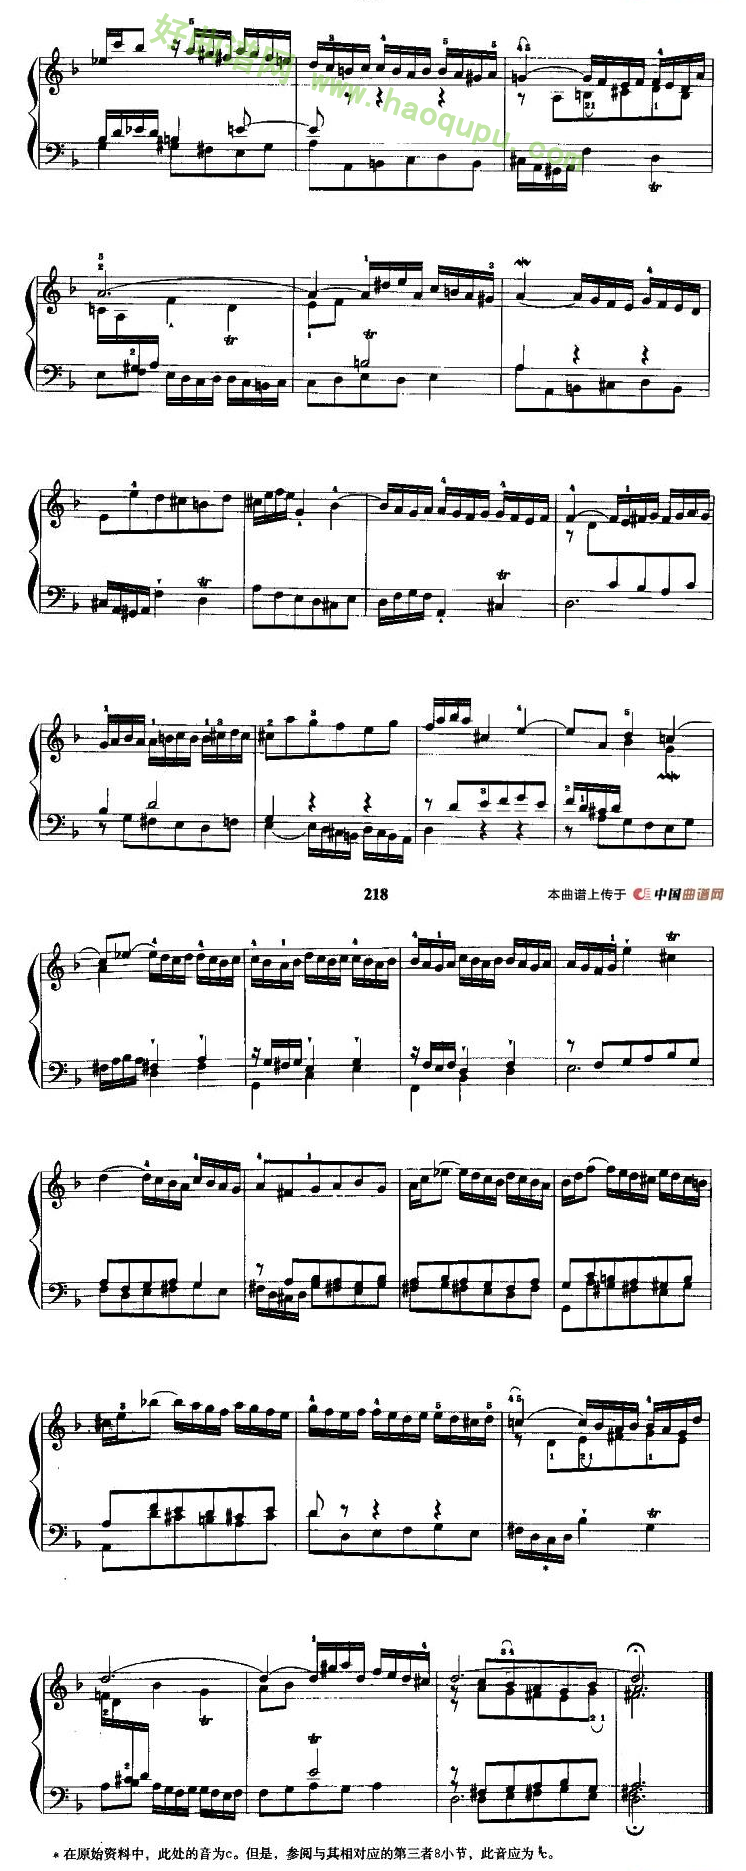 《d小调前奏曲与赋格》 手风琴曲谱